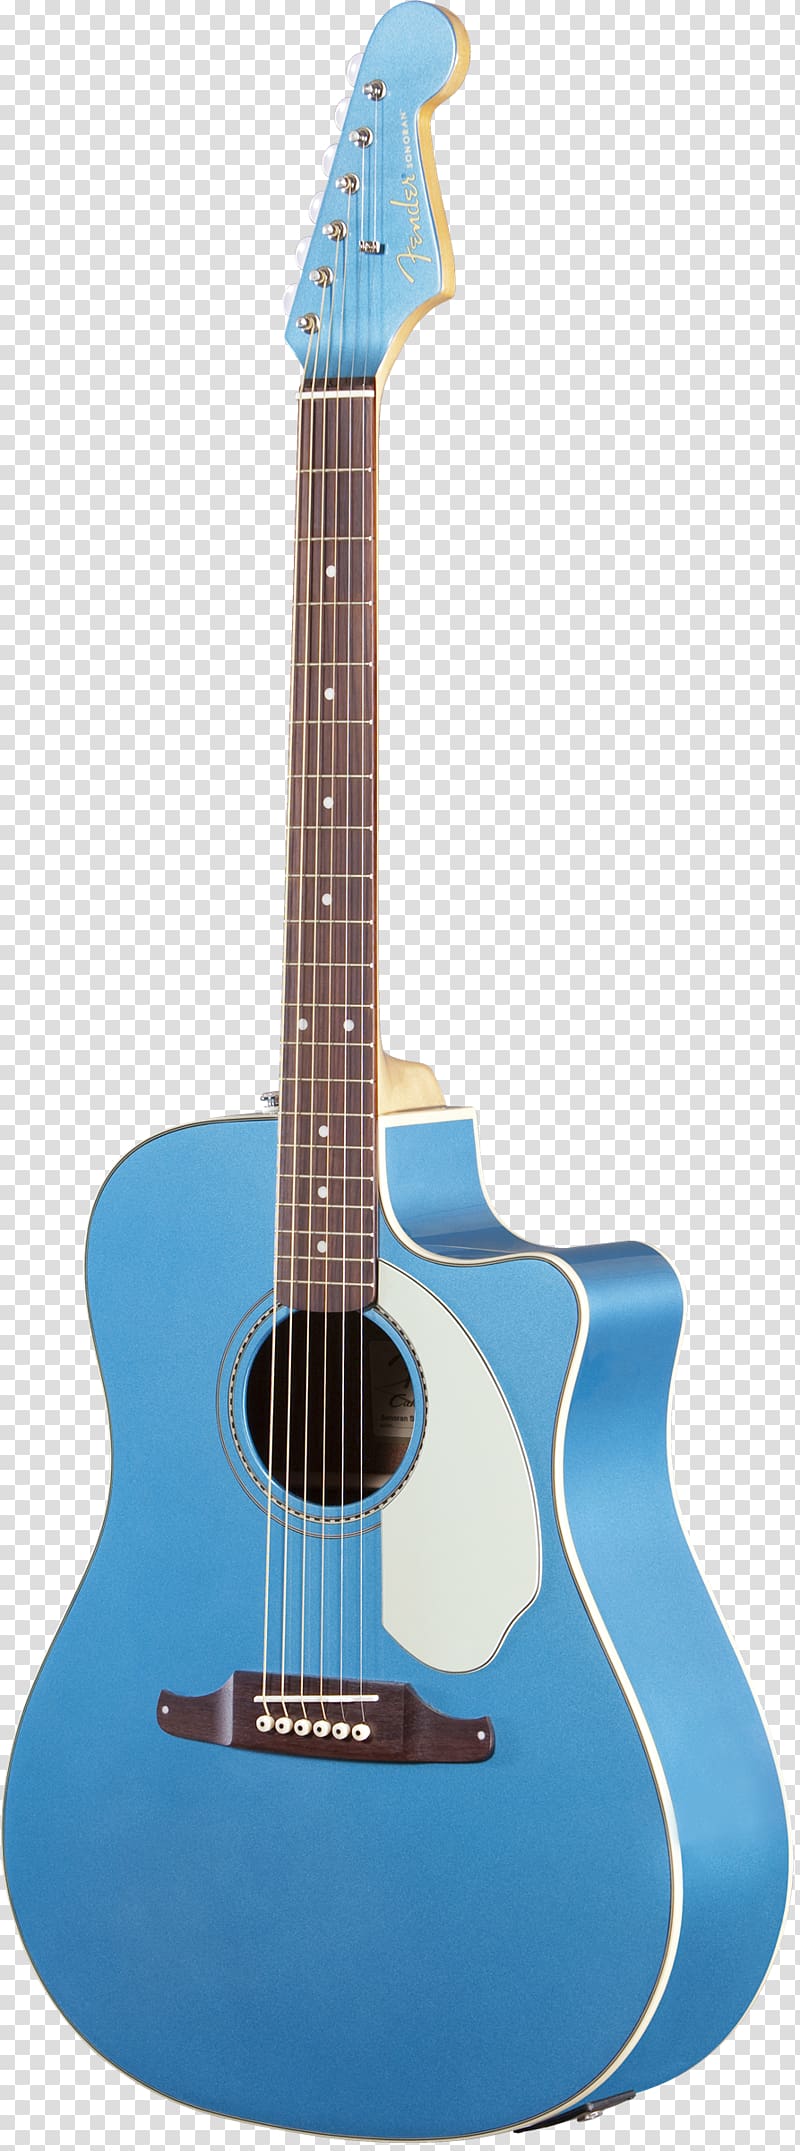 Acoustic guitar Acoustic-electric guitar Bass guitar Fender Sonoran SCE, Acoustic Guitar transparent background PNG clipart